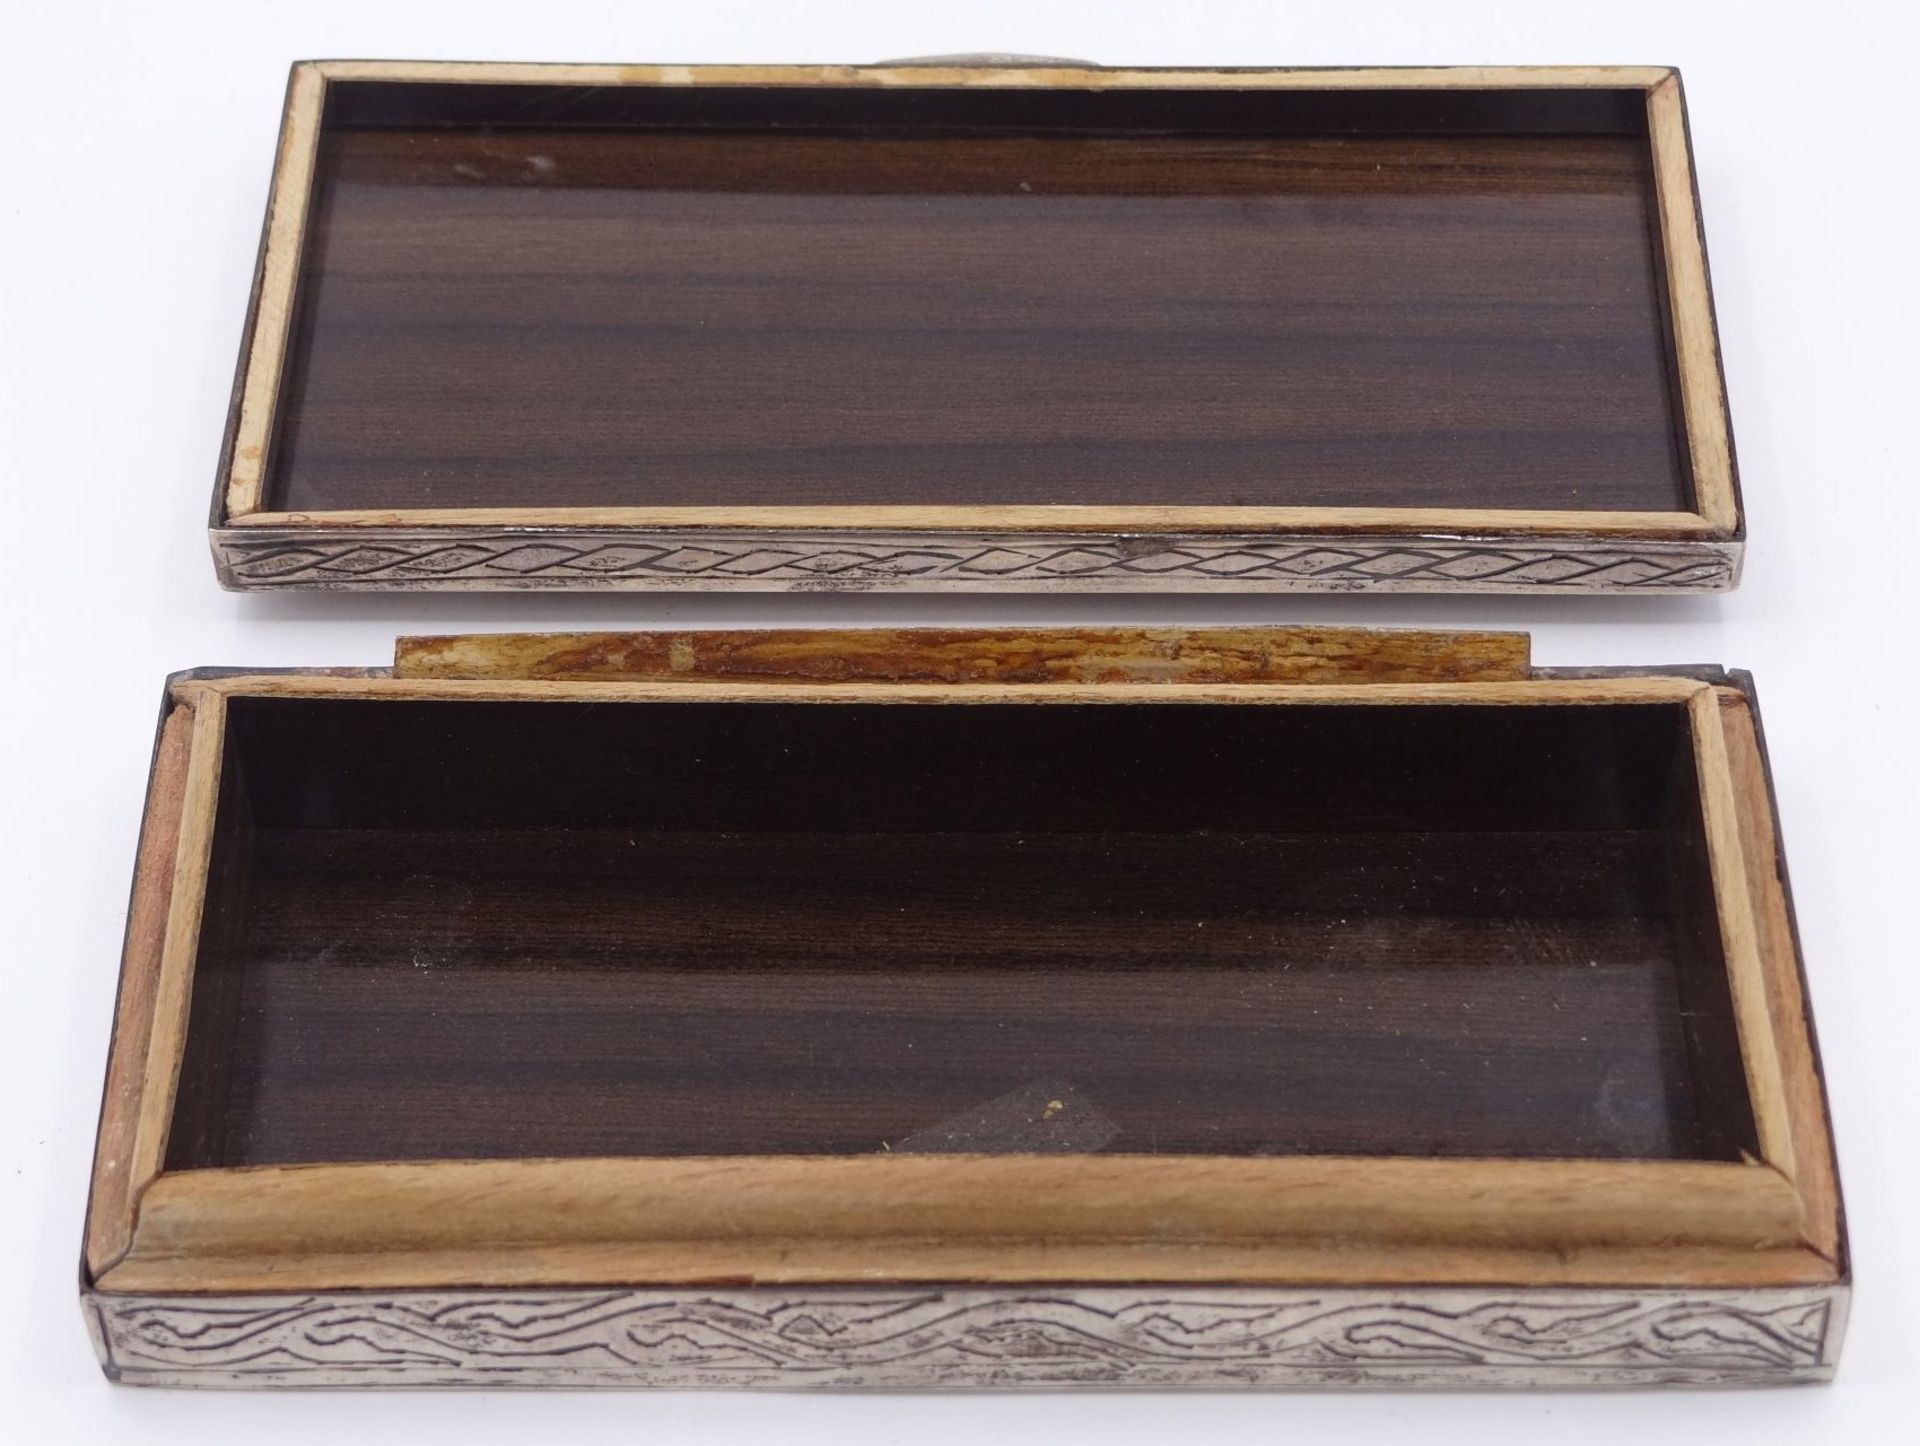 Zigarettendose, Silber-925-, arabisch gepunzt, Deckelscharnier defekt, innen Holz, H-2 cm, 14x7 - Bild 7 aus 7